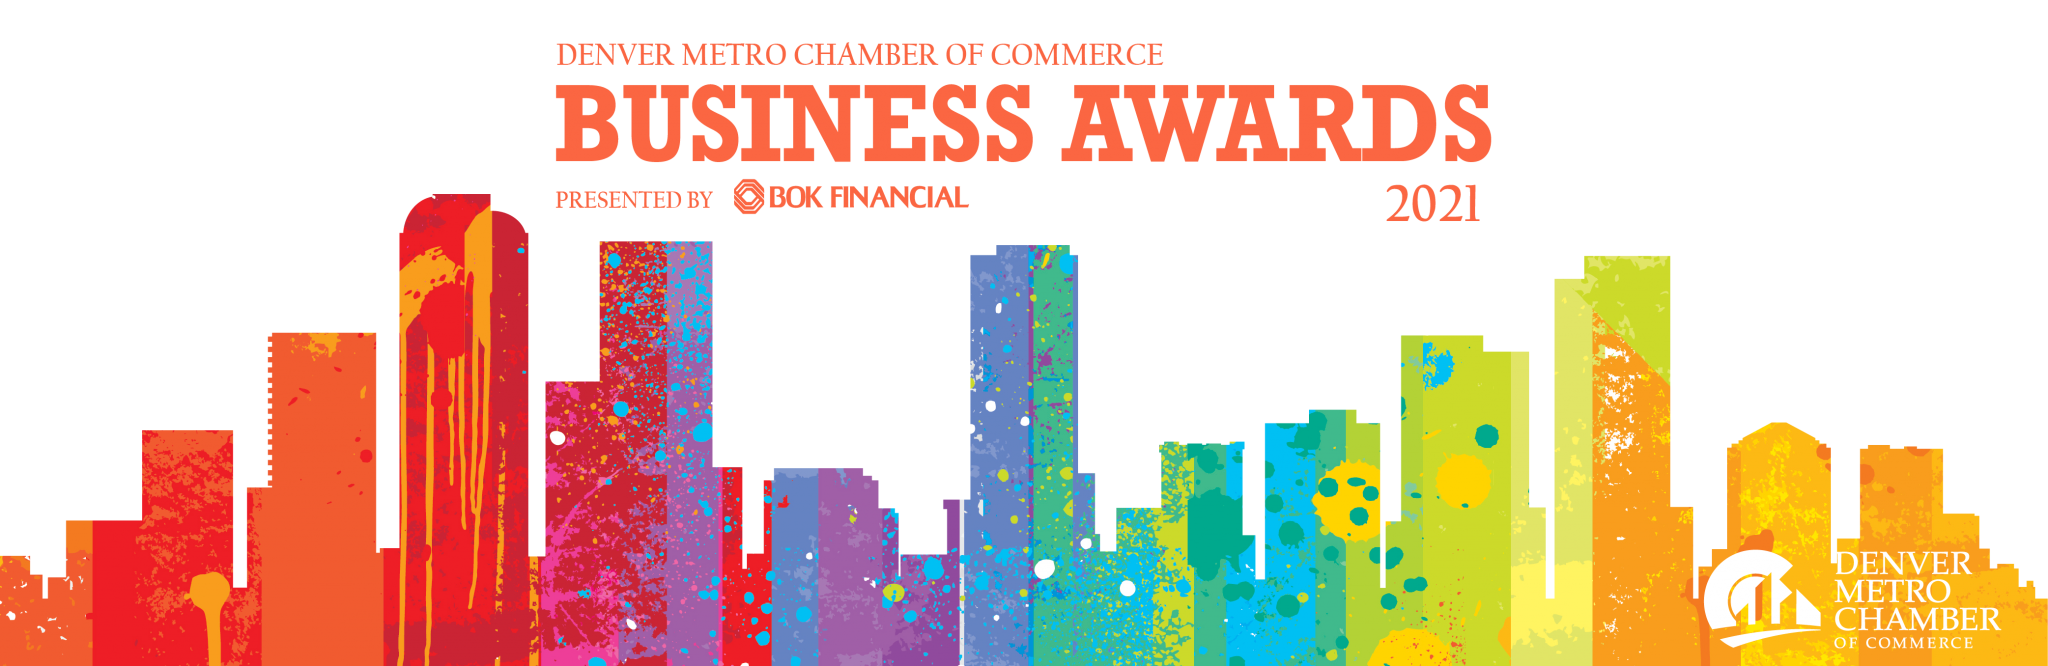 Denver Metro Chamber Honors 2021 Business Awards Winners - ColoradoBiz